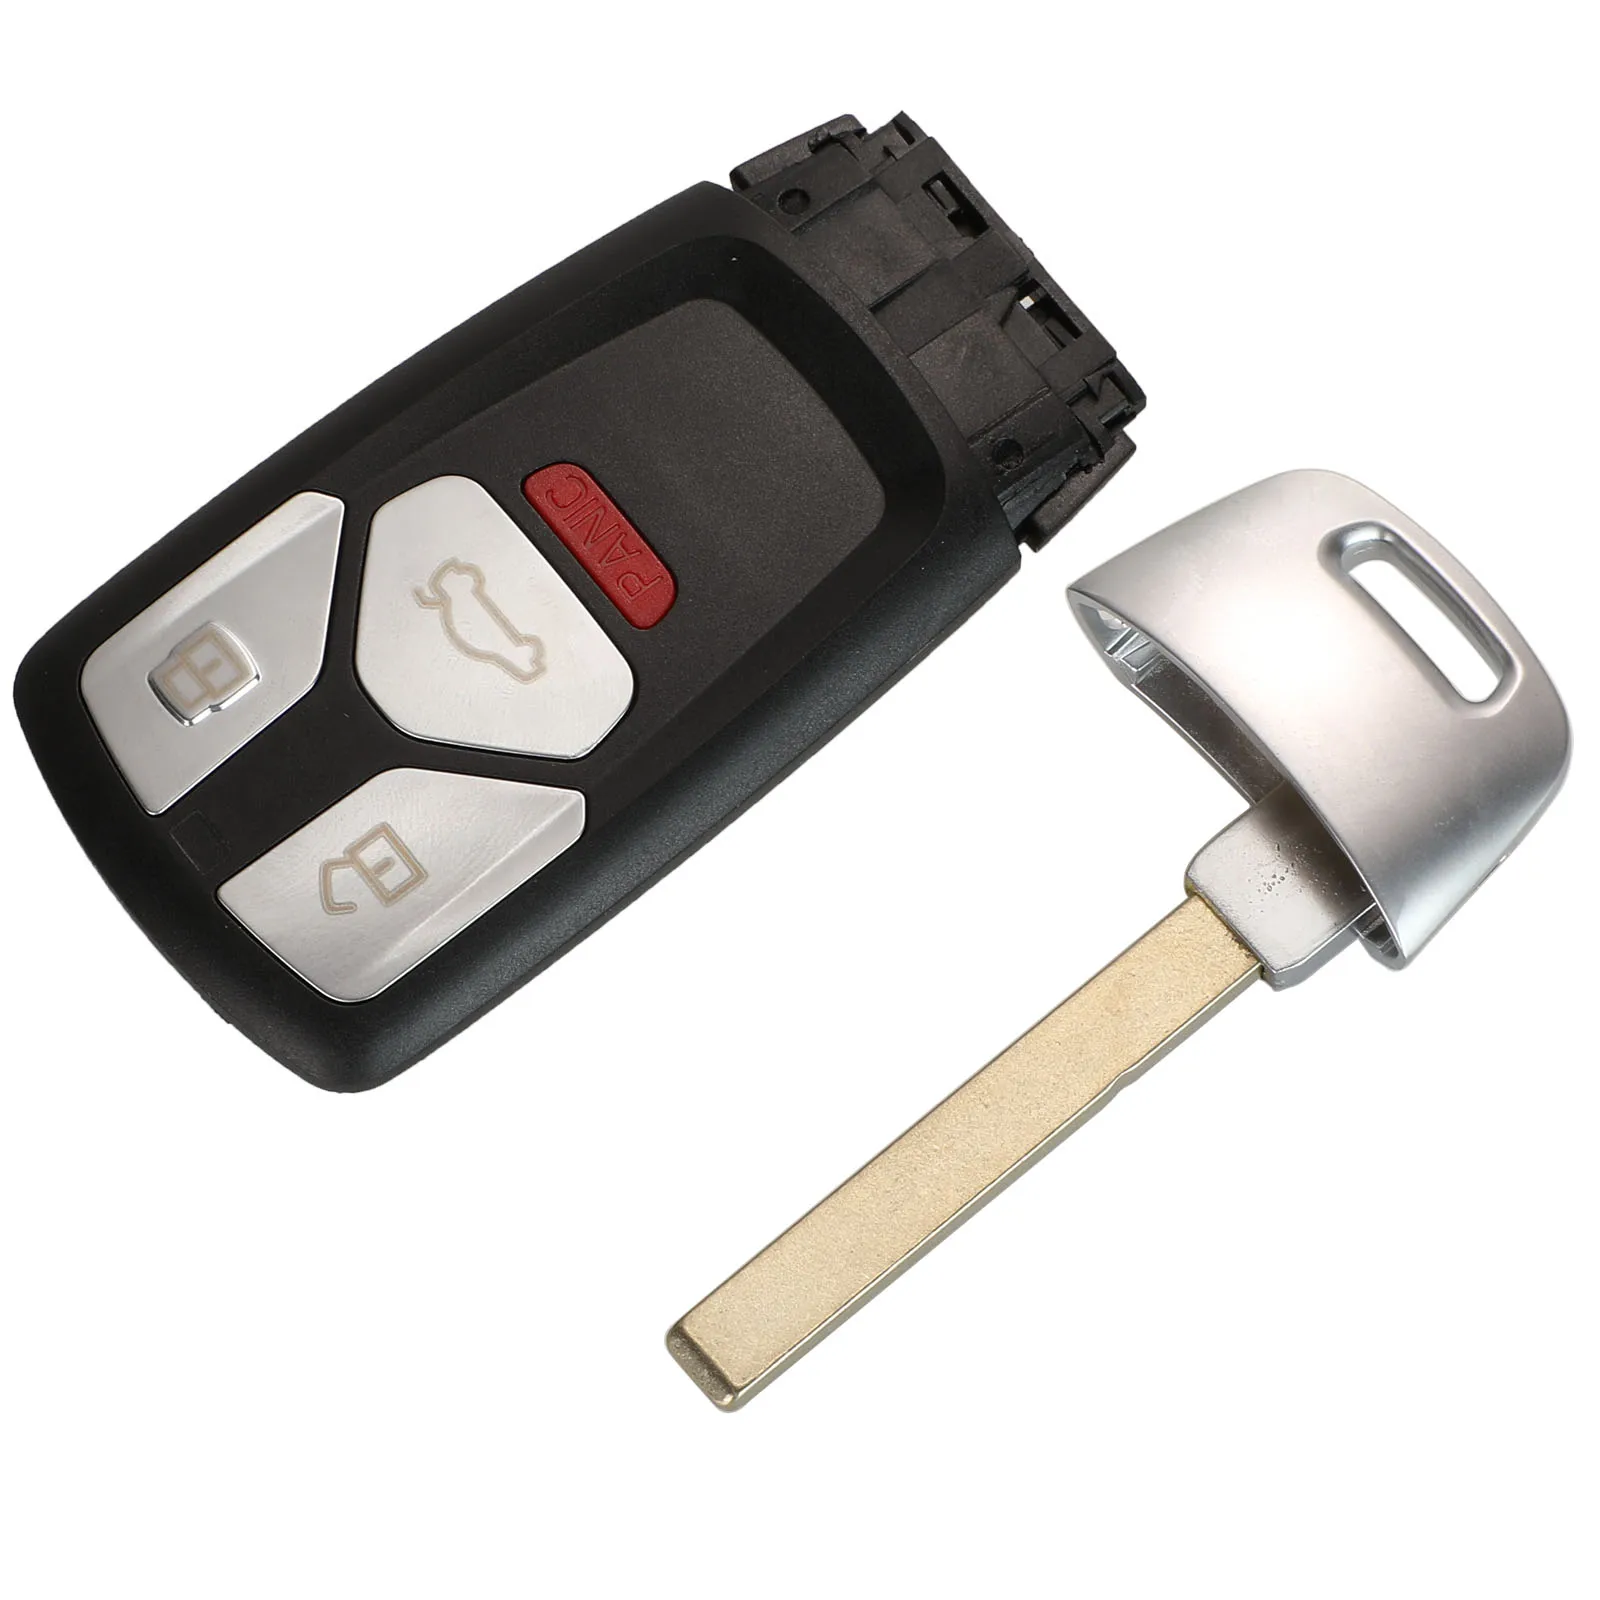 Bilchave 3/4 кнопки дистанционного смарт автомобиля ключ оболочки для Audi TT A4 A5 S4 S5 Q7 SQ7